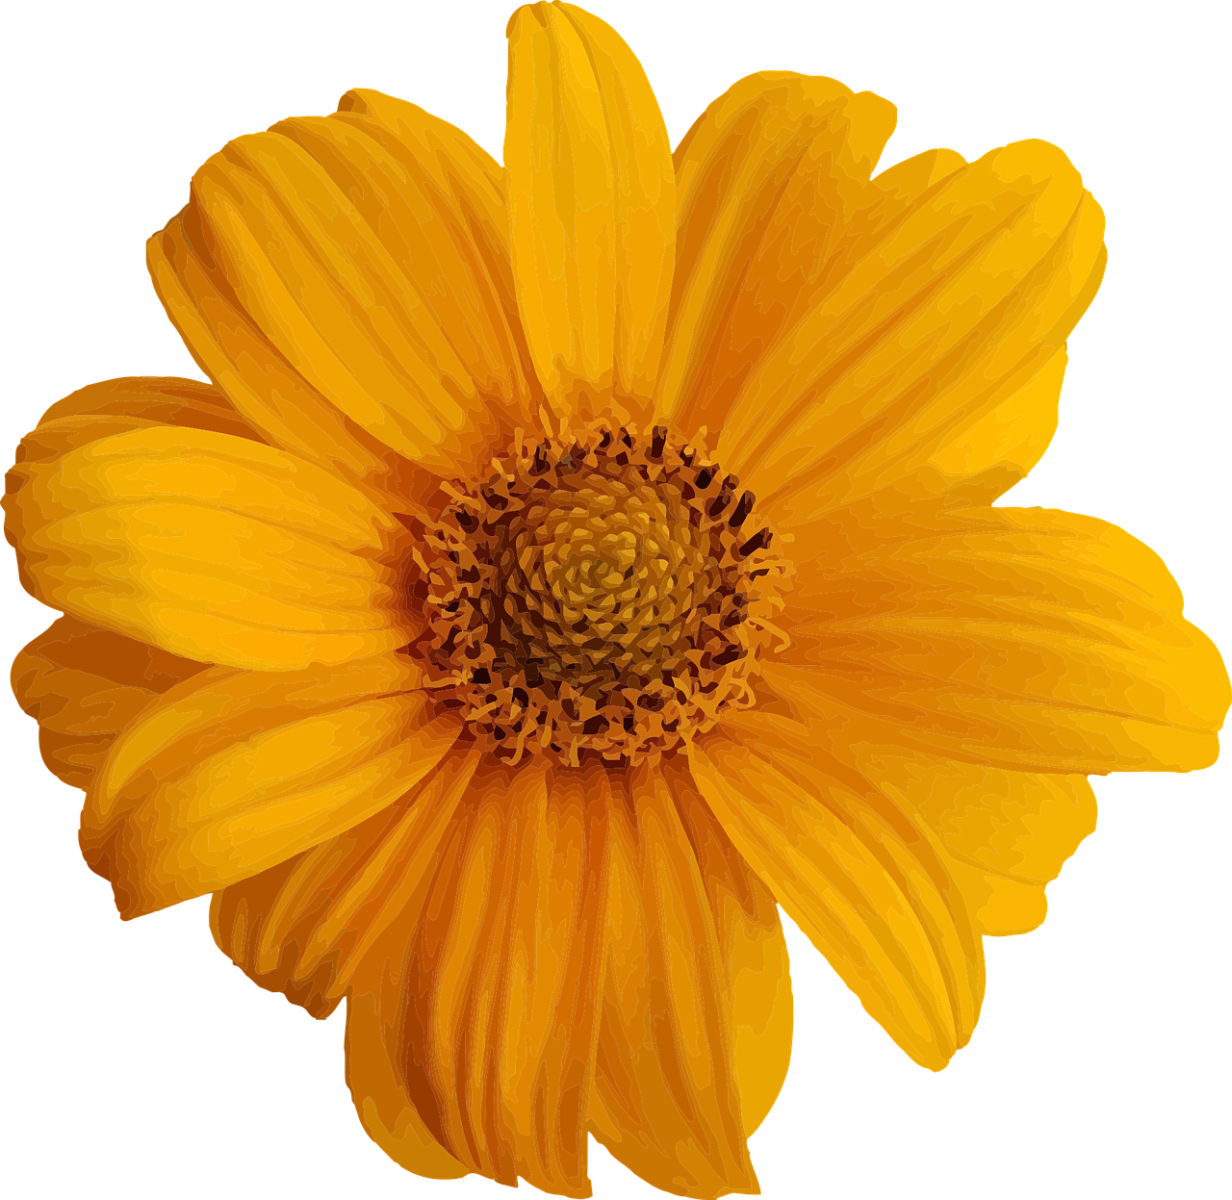 Image of yellow flower.